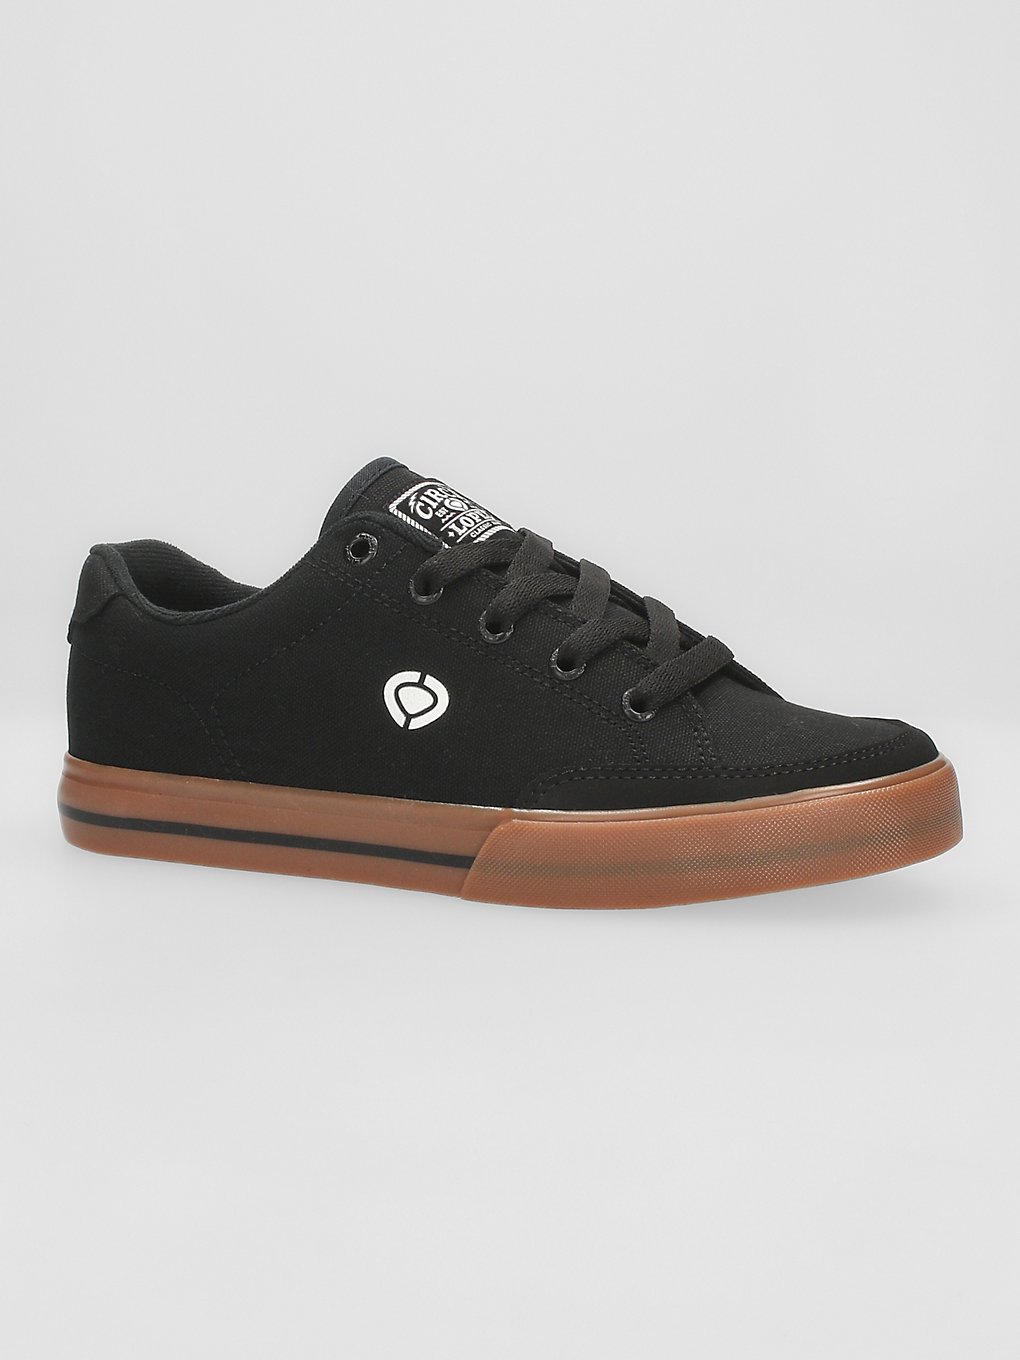 C1rca Al 50 Slim Skate Shoes black gum kaufen